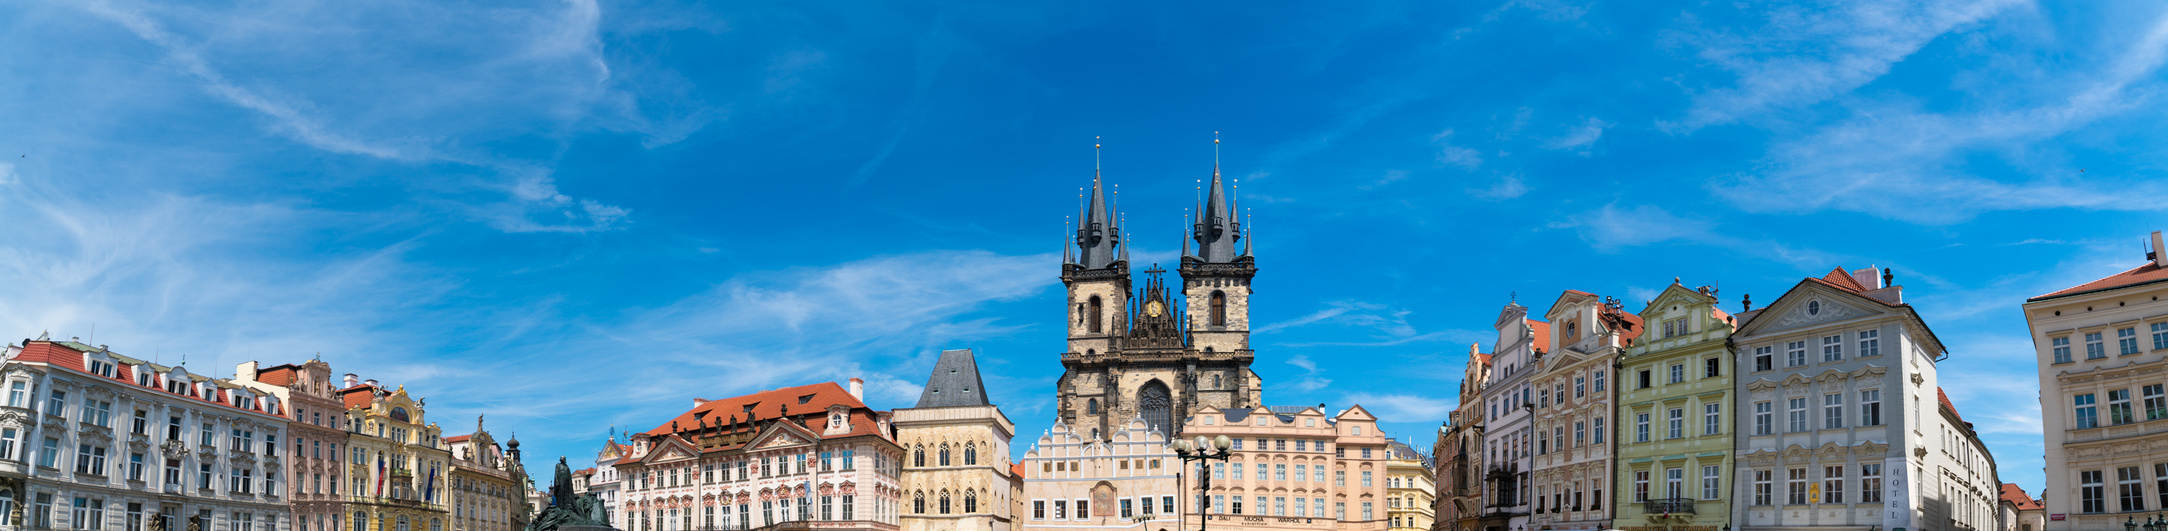 PRAGUE, CZECH REPUBLIC -June, 2016: The central square of the city of Prague